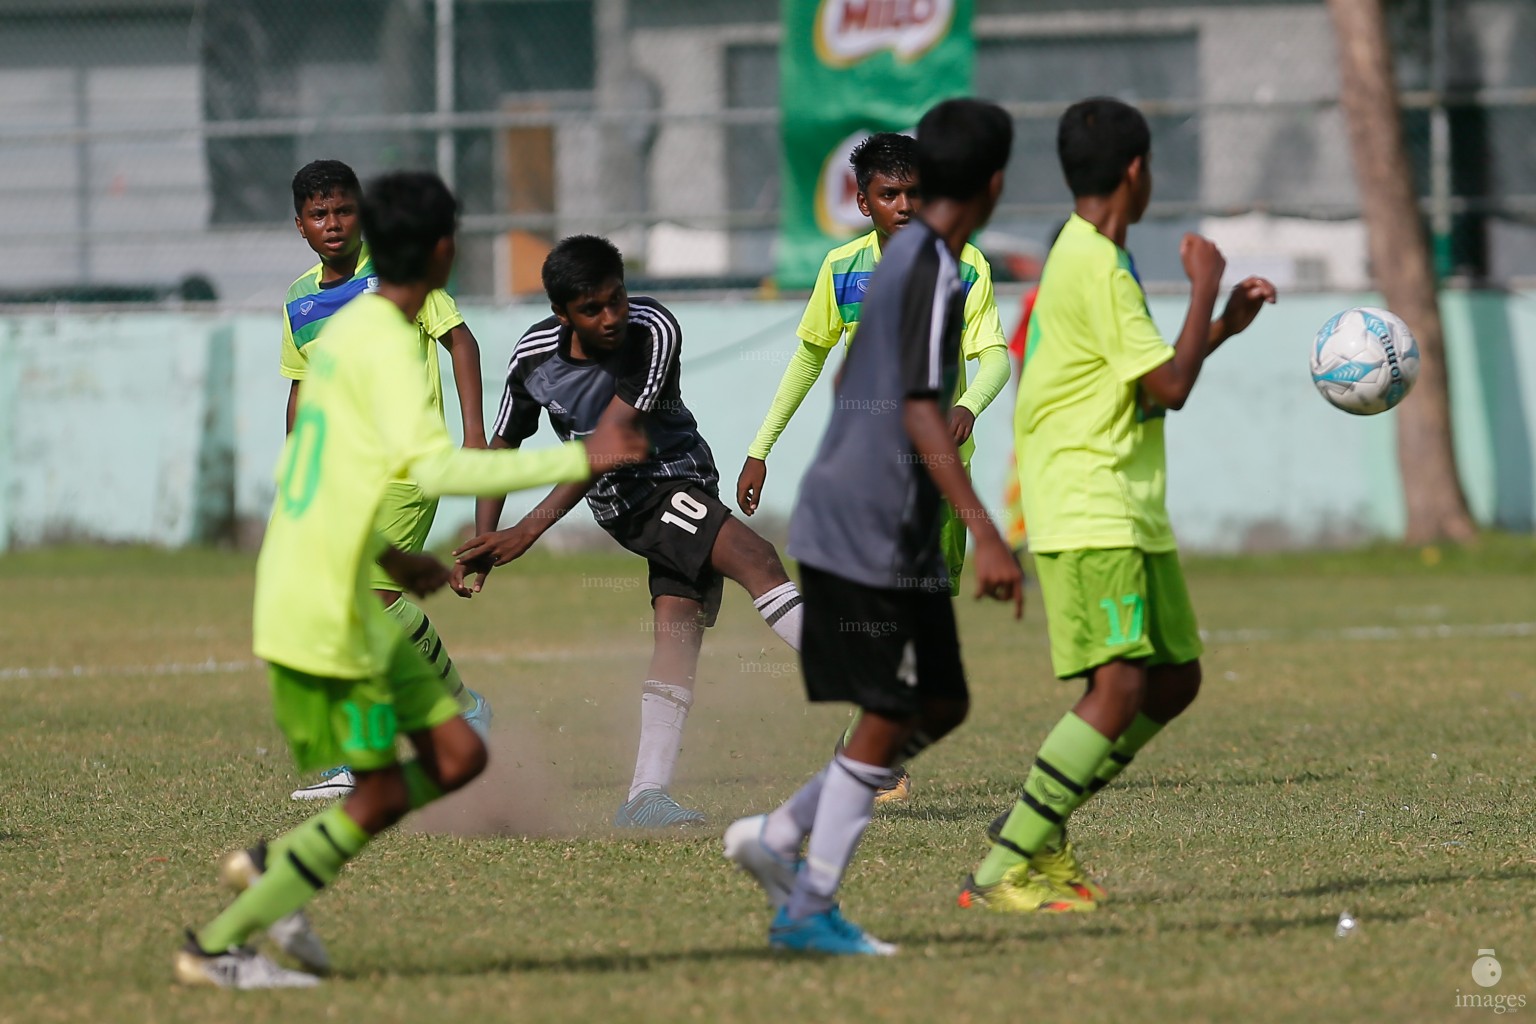 Milo Inter-school U14 Football - Ahmadhiyya International School vs Kalaafaanu School